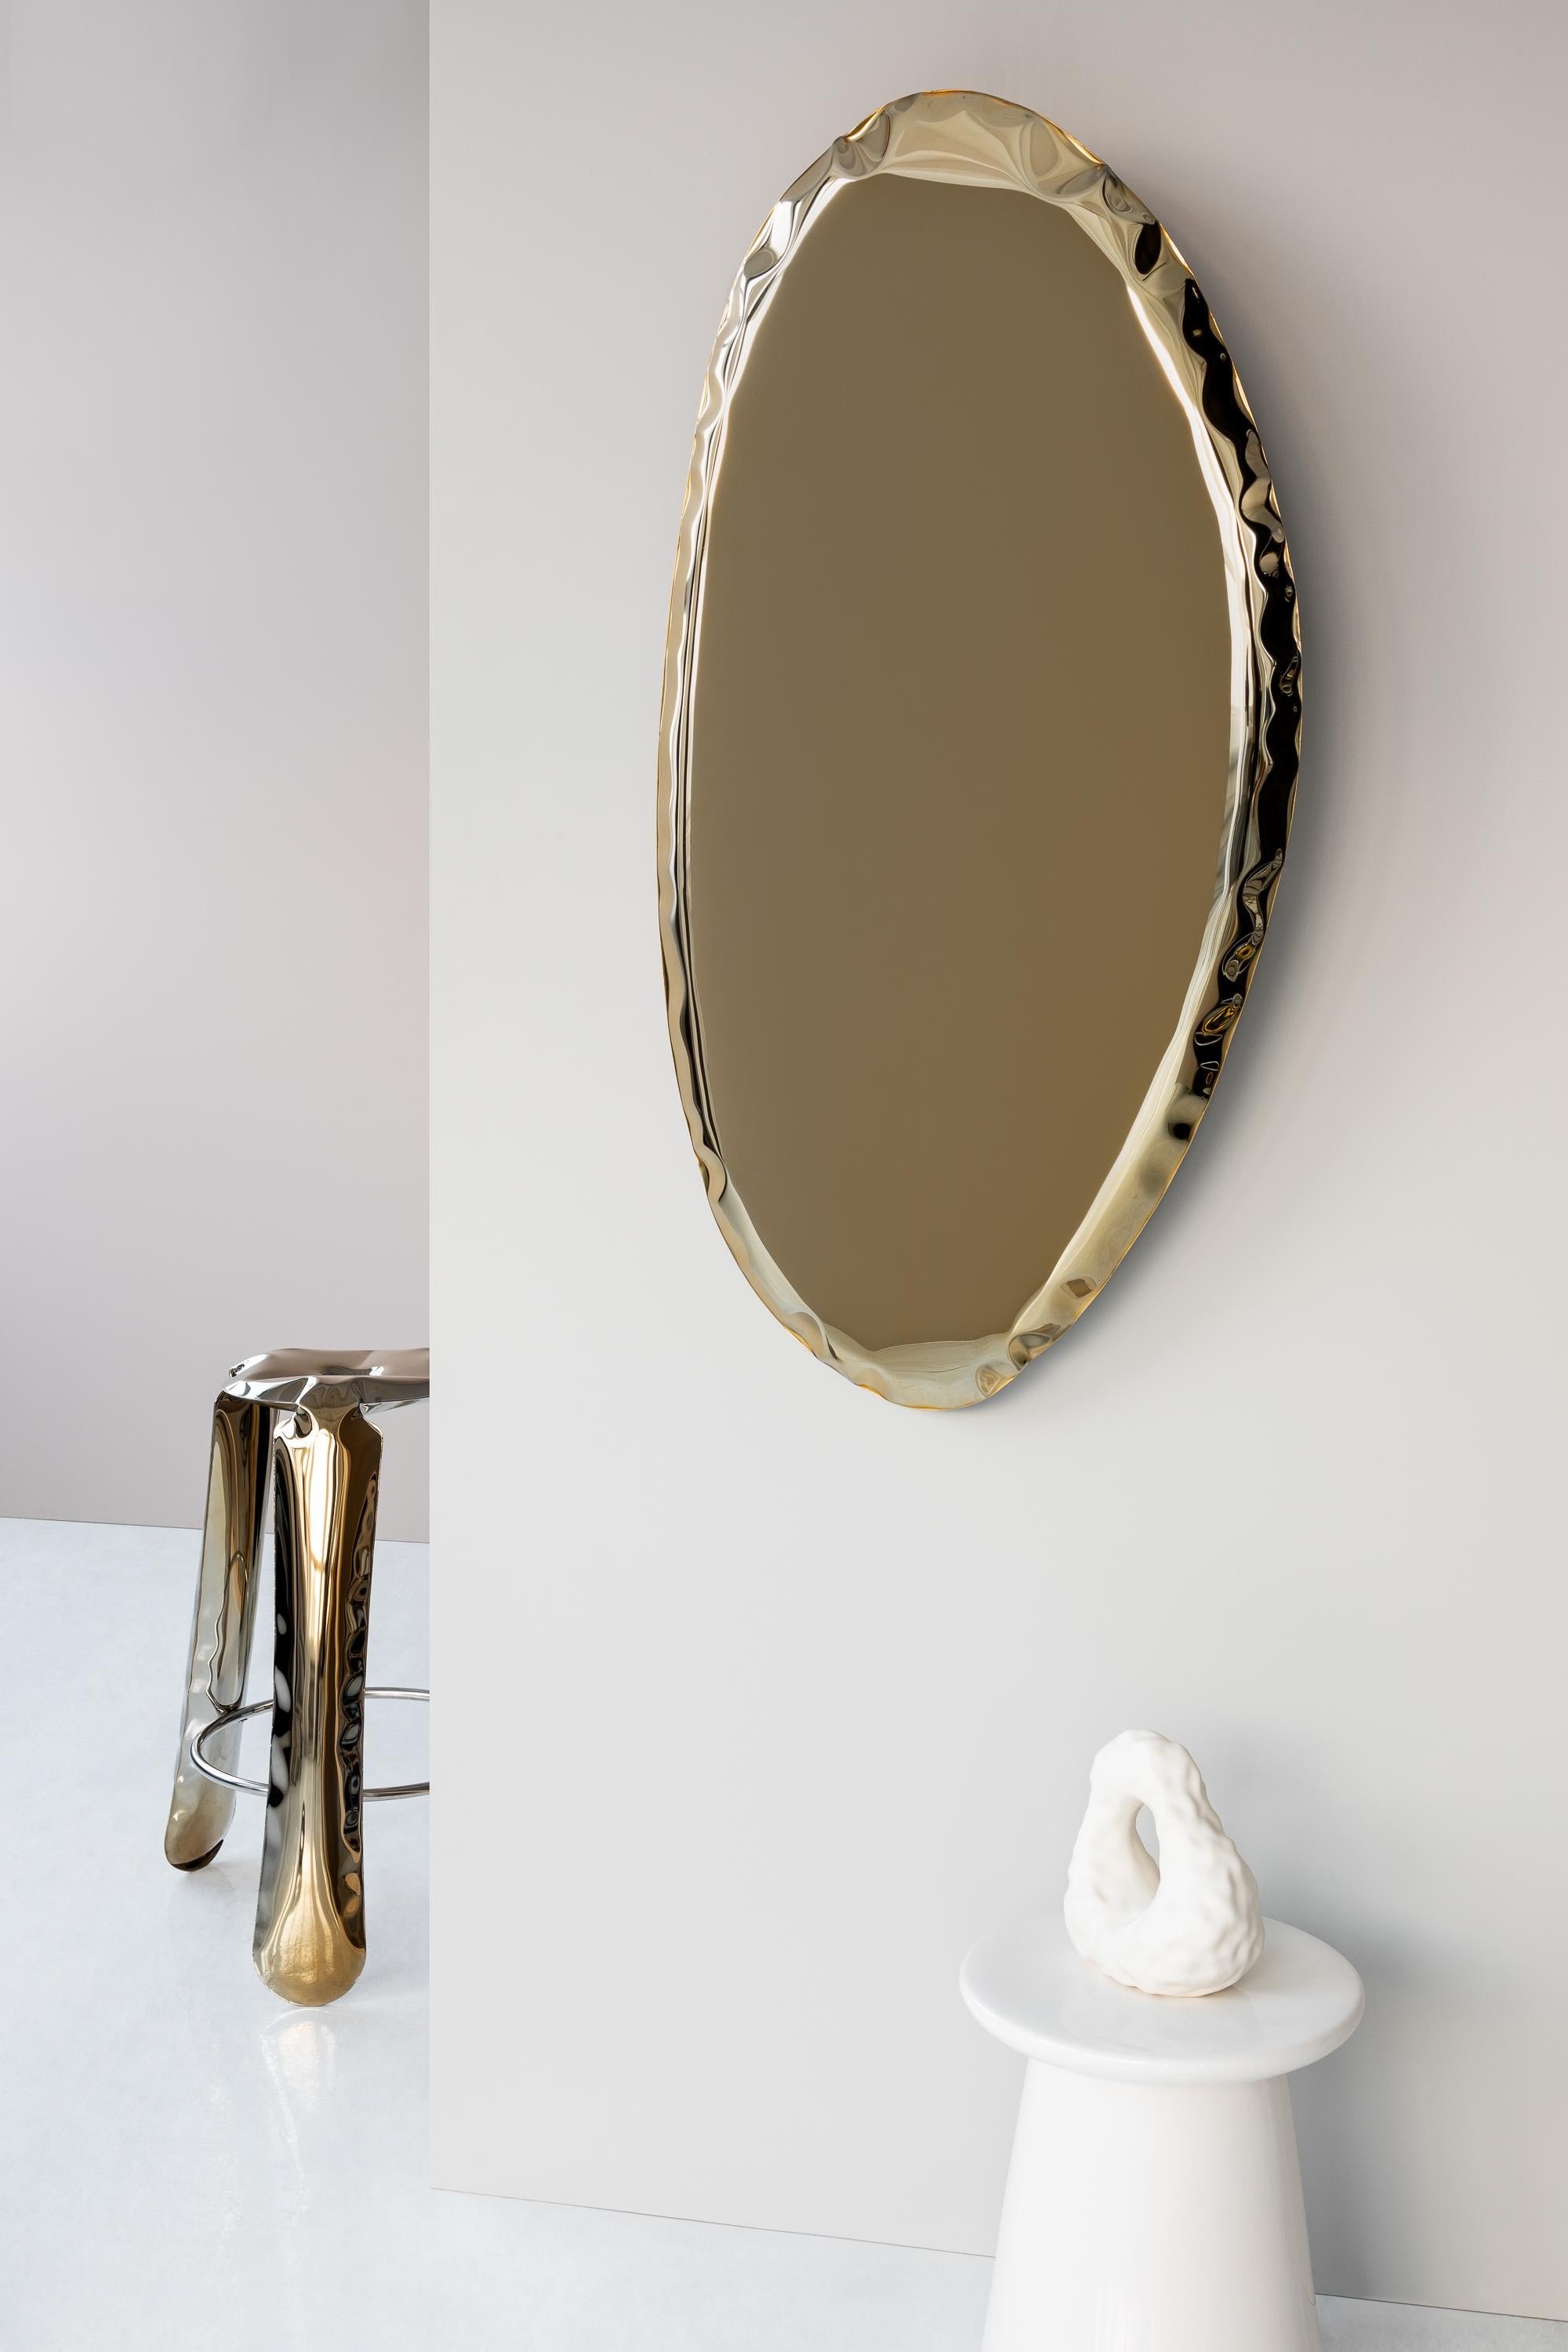 Polish Light Gold Tafla O5 Wall Mirror by Zieta For Sale